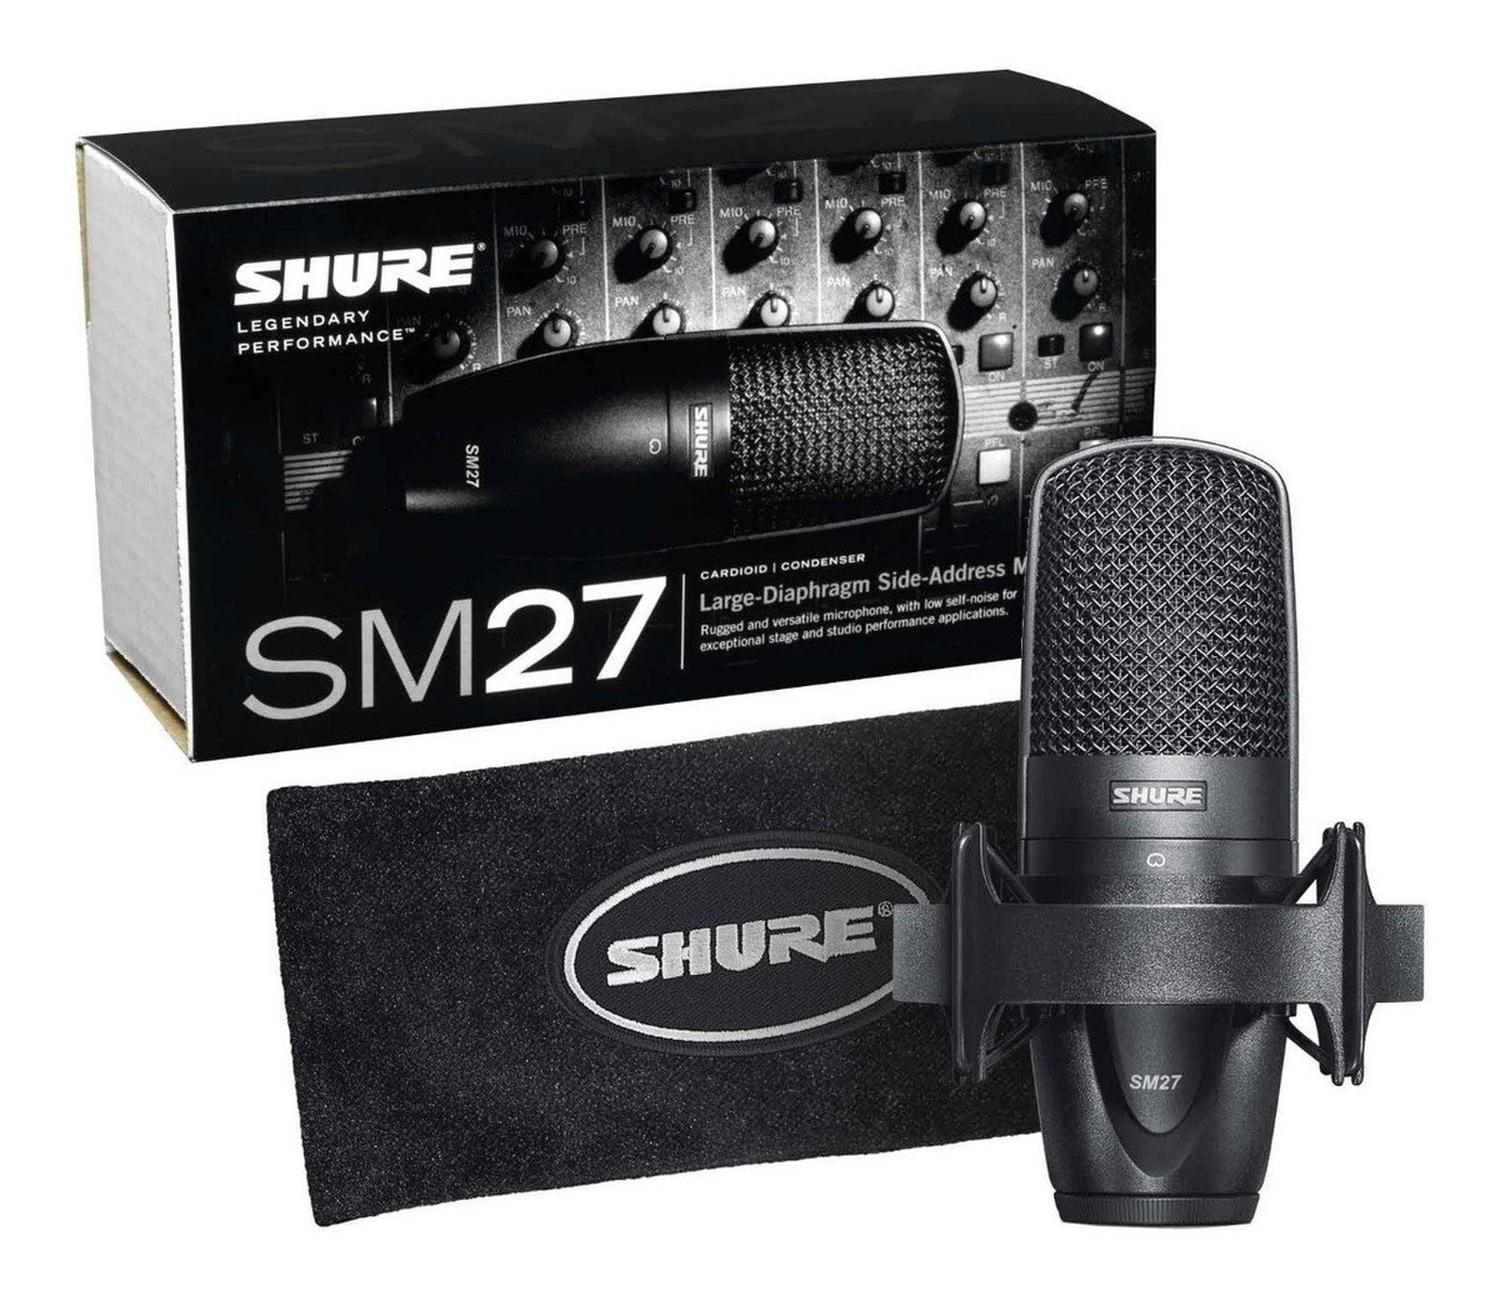 Shure Sm27 Microfono Condensador Multiproposito Original